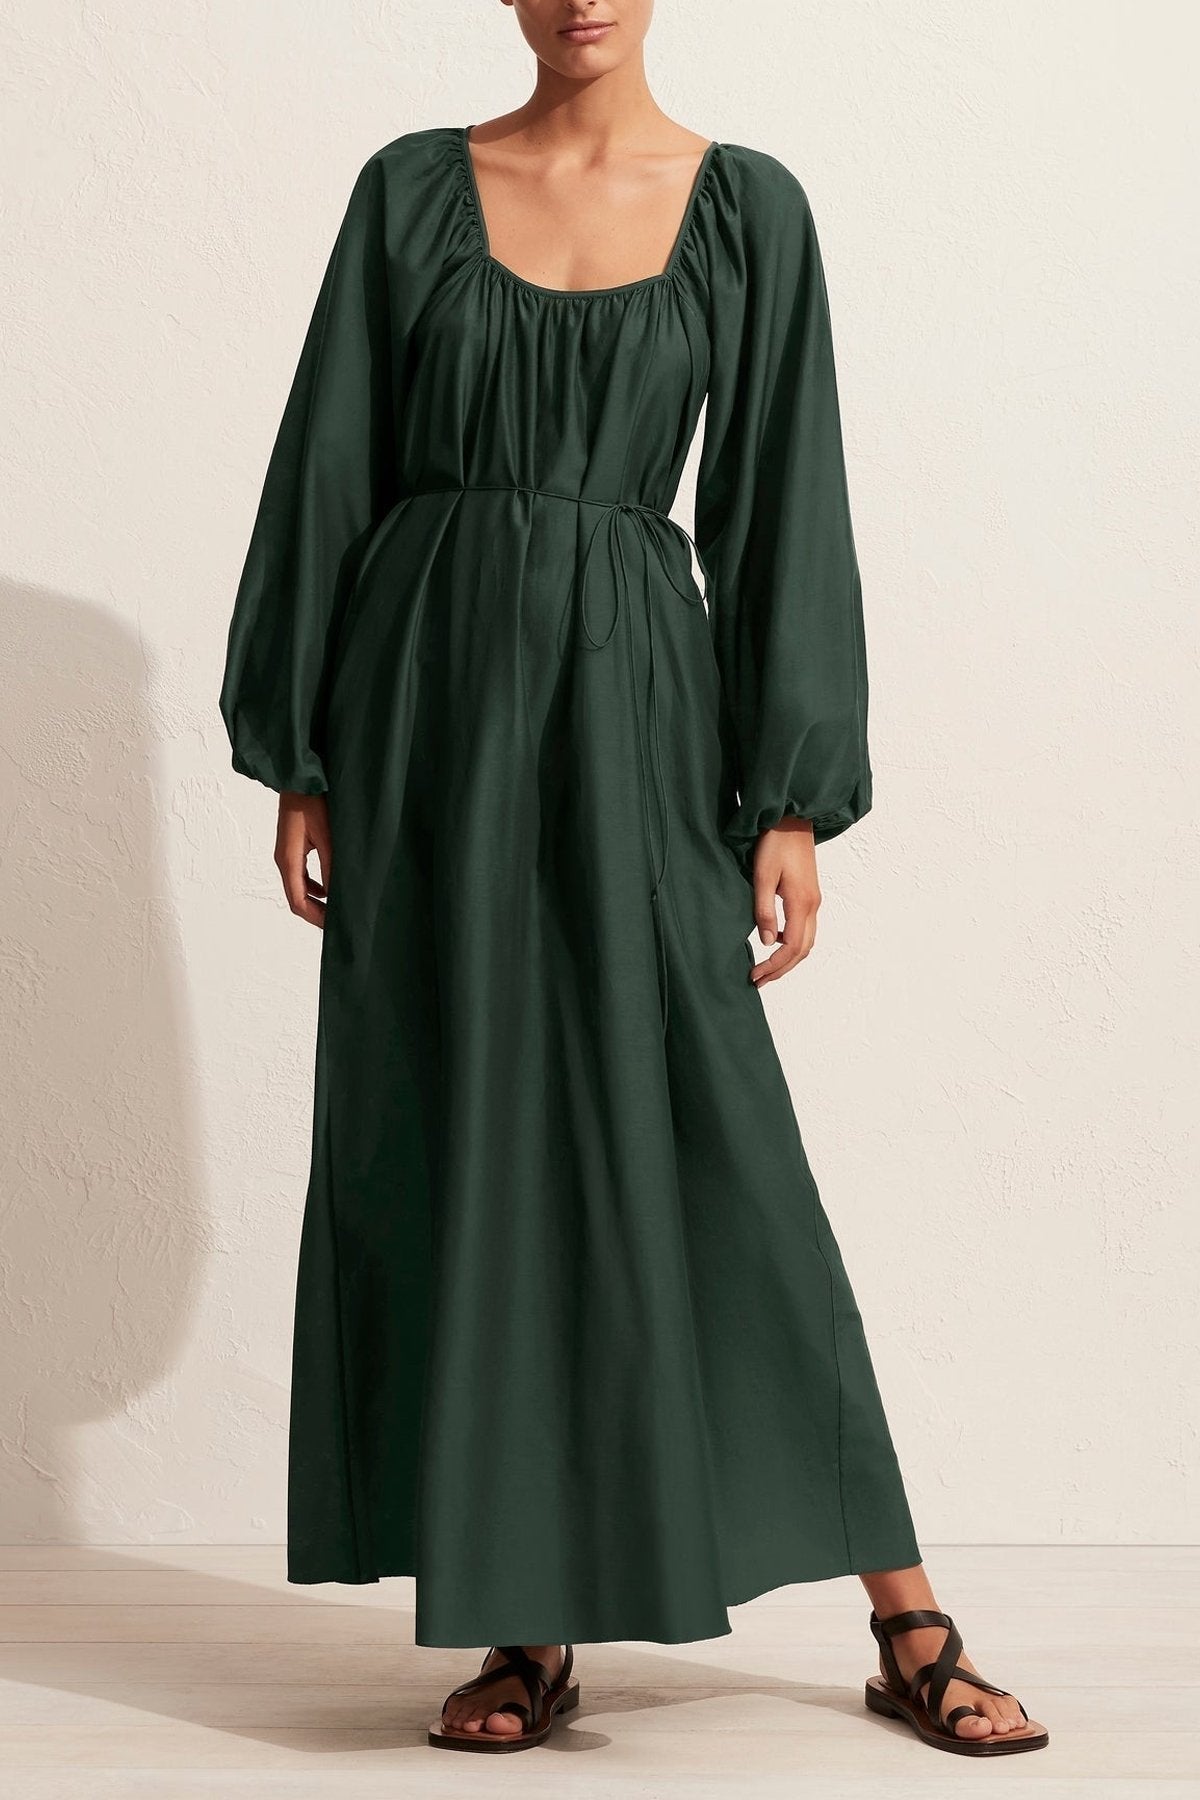 Decolette Dress in Emerald - shop-olivia.com